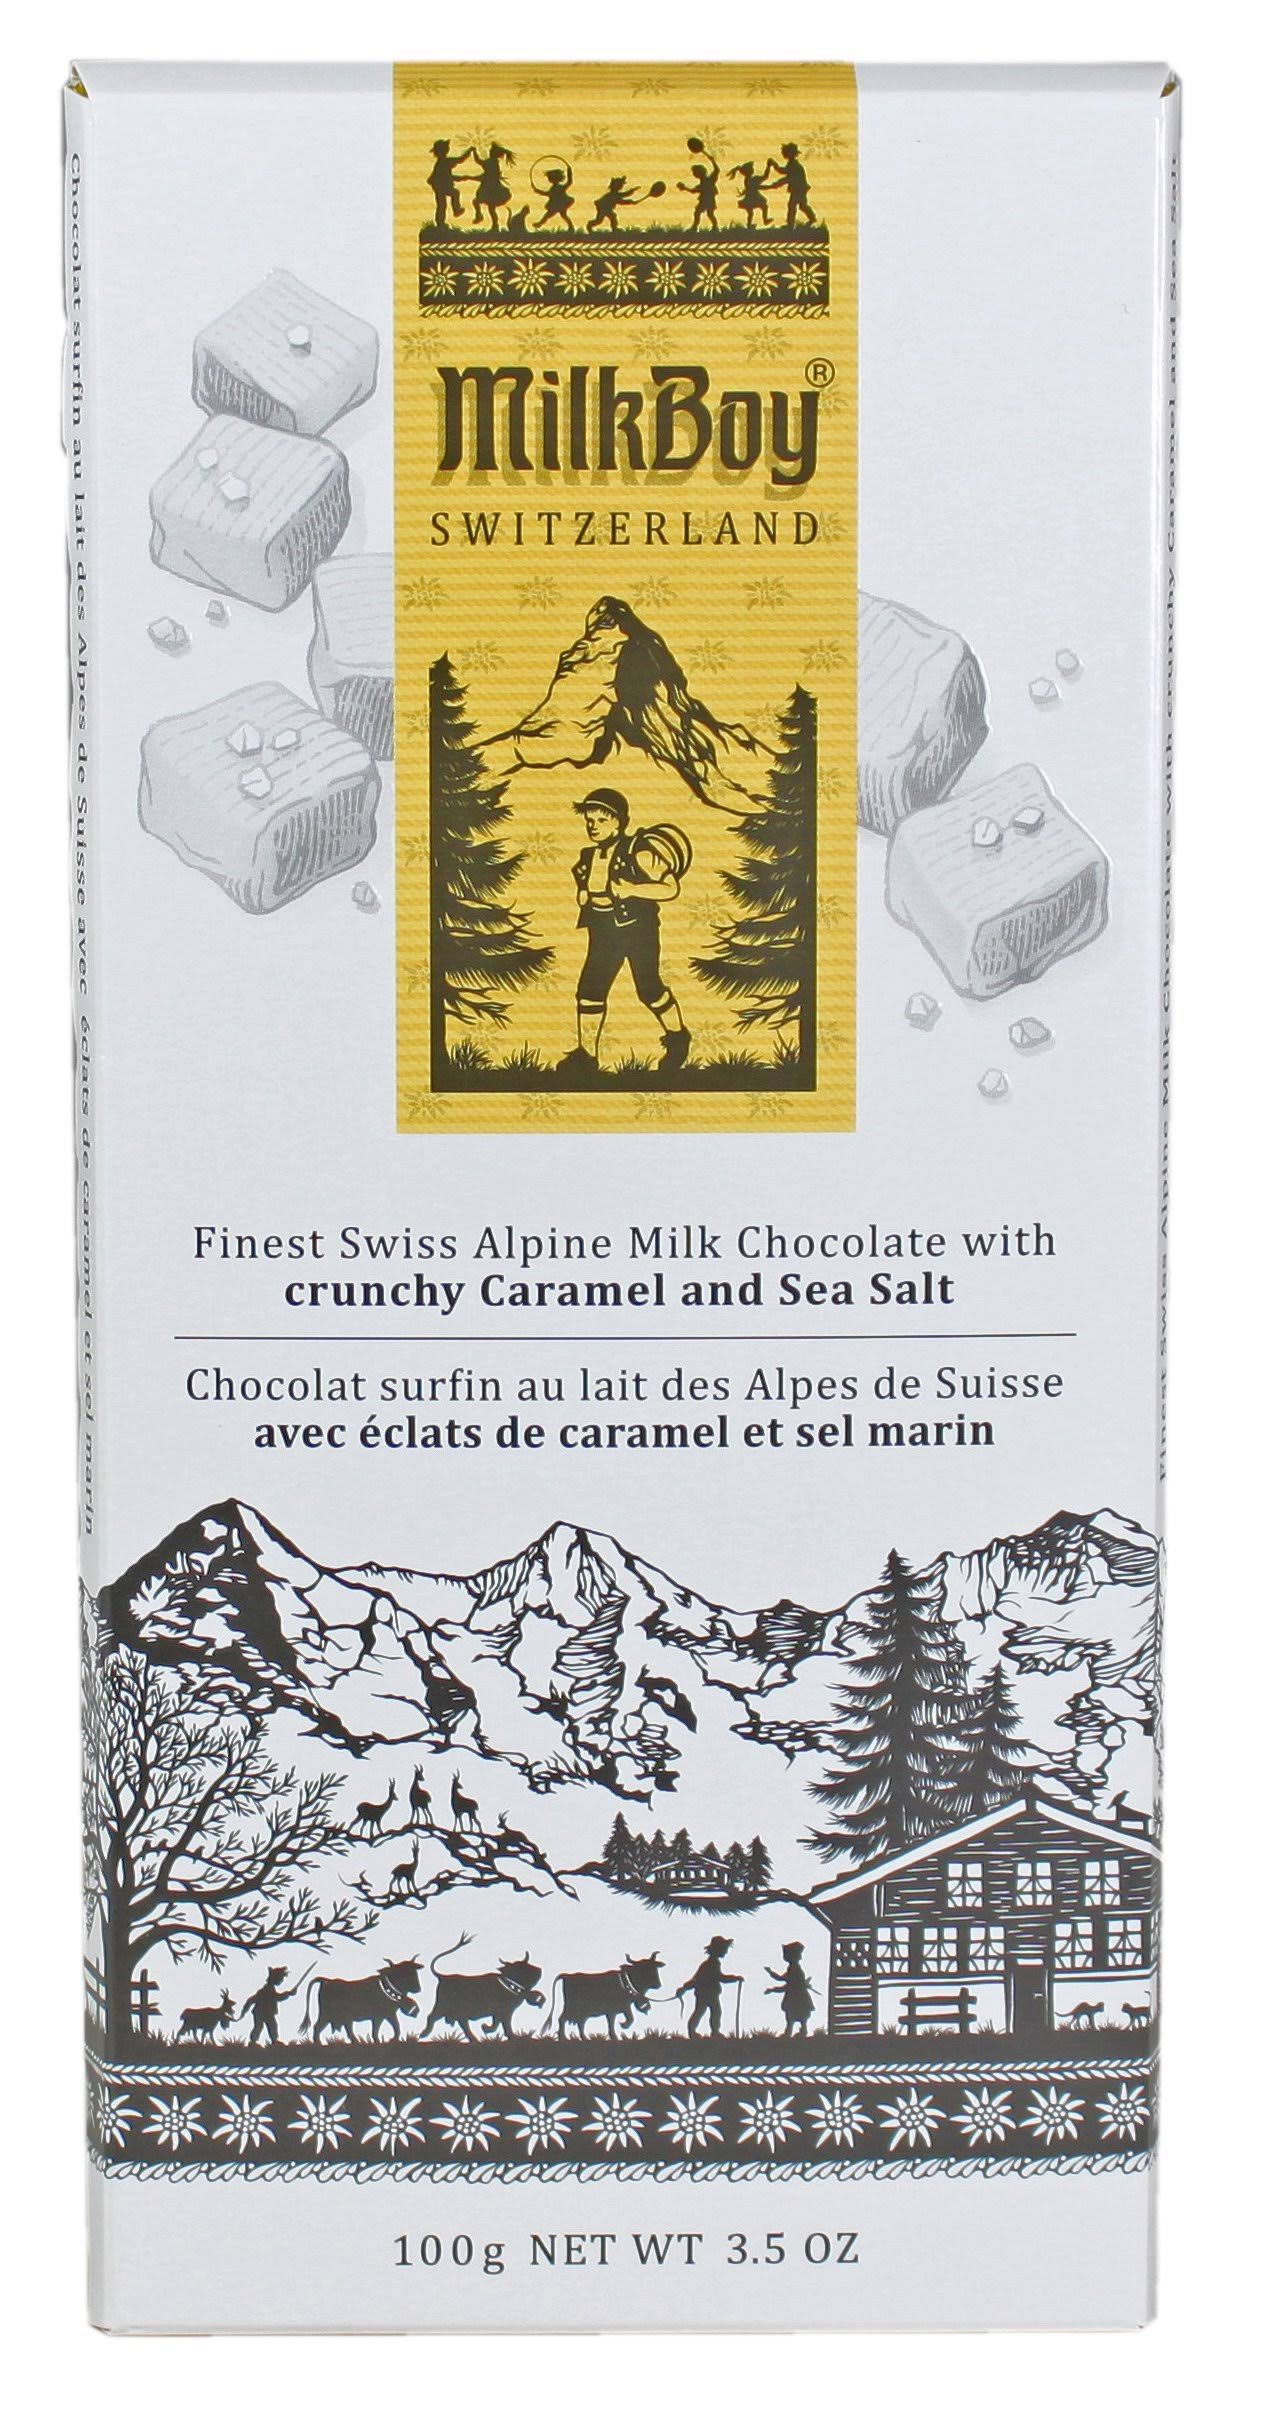 Milkboy Swiss Alpine Milk Chocolate - Crunchy Caramel and Sea Salt, 100g